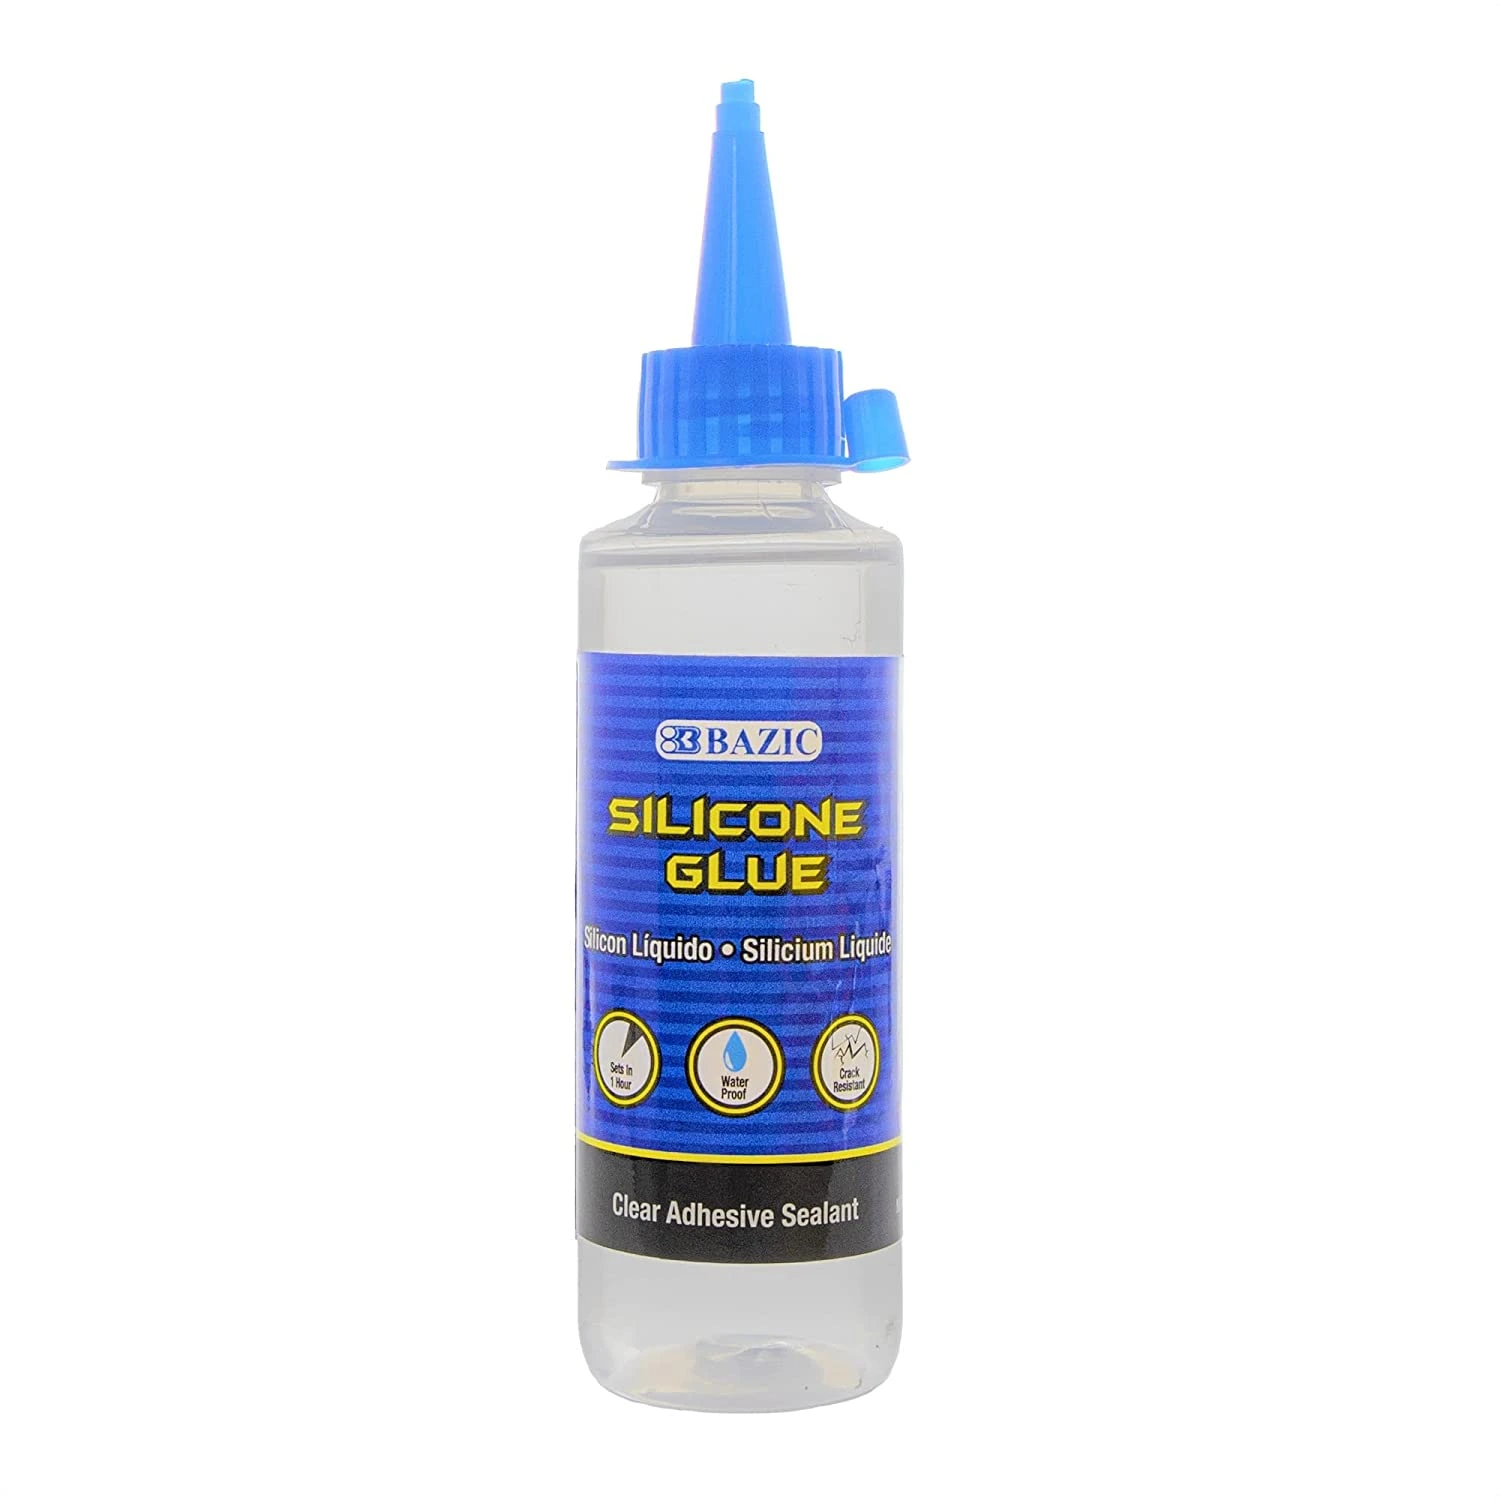 Silicone Glue 3.38 FL OZ (100 mL) - The CEO Creative